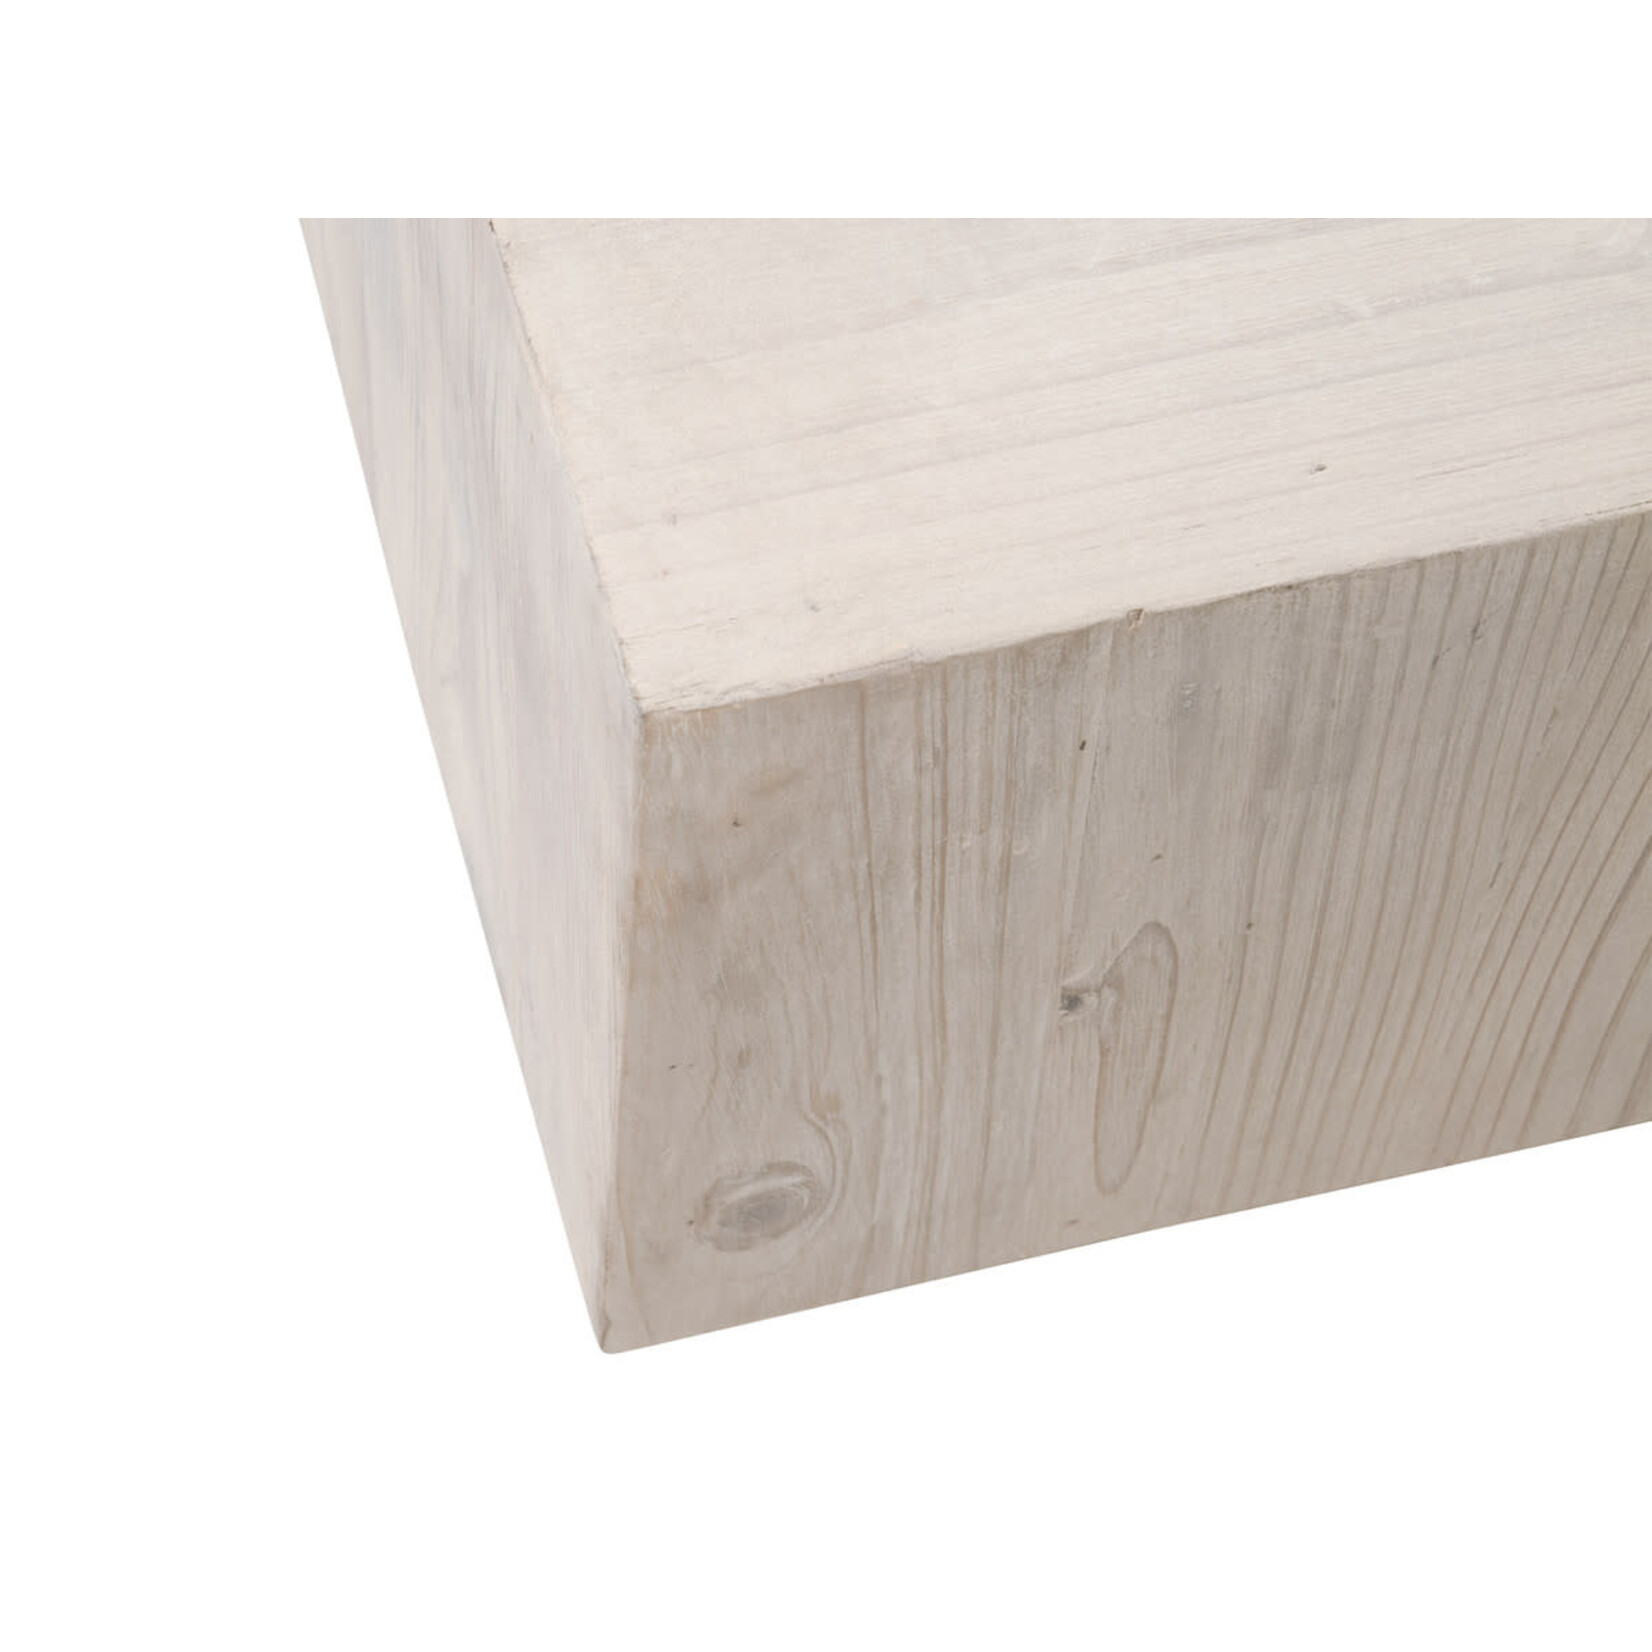 Outside The Box 54x30x15 Montauk White Wash Pine Rectangular Coffee Table